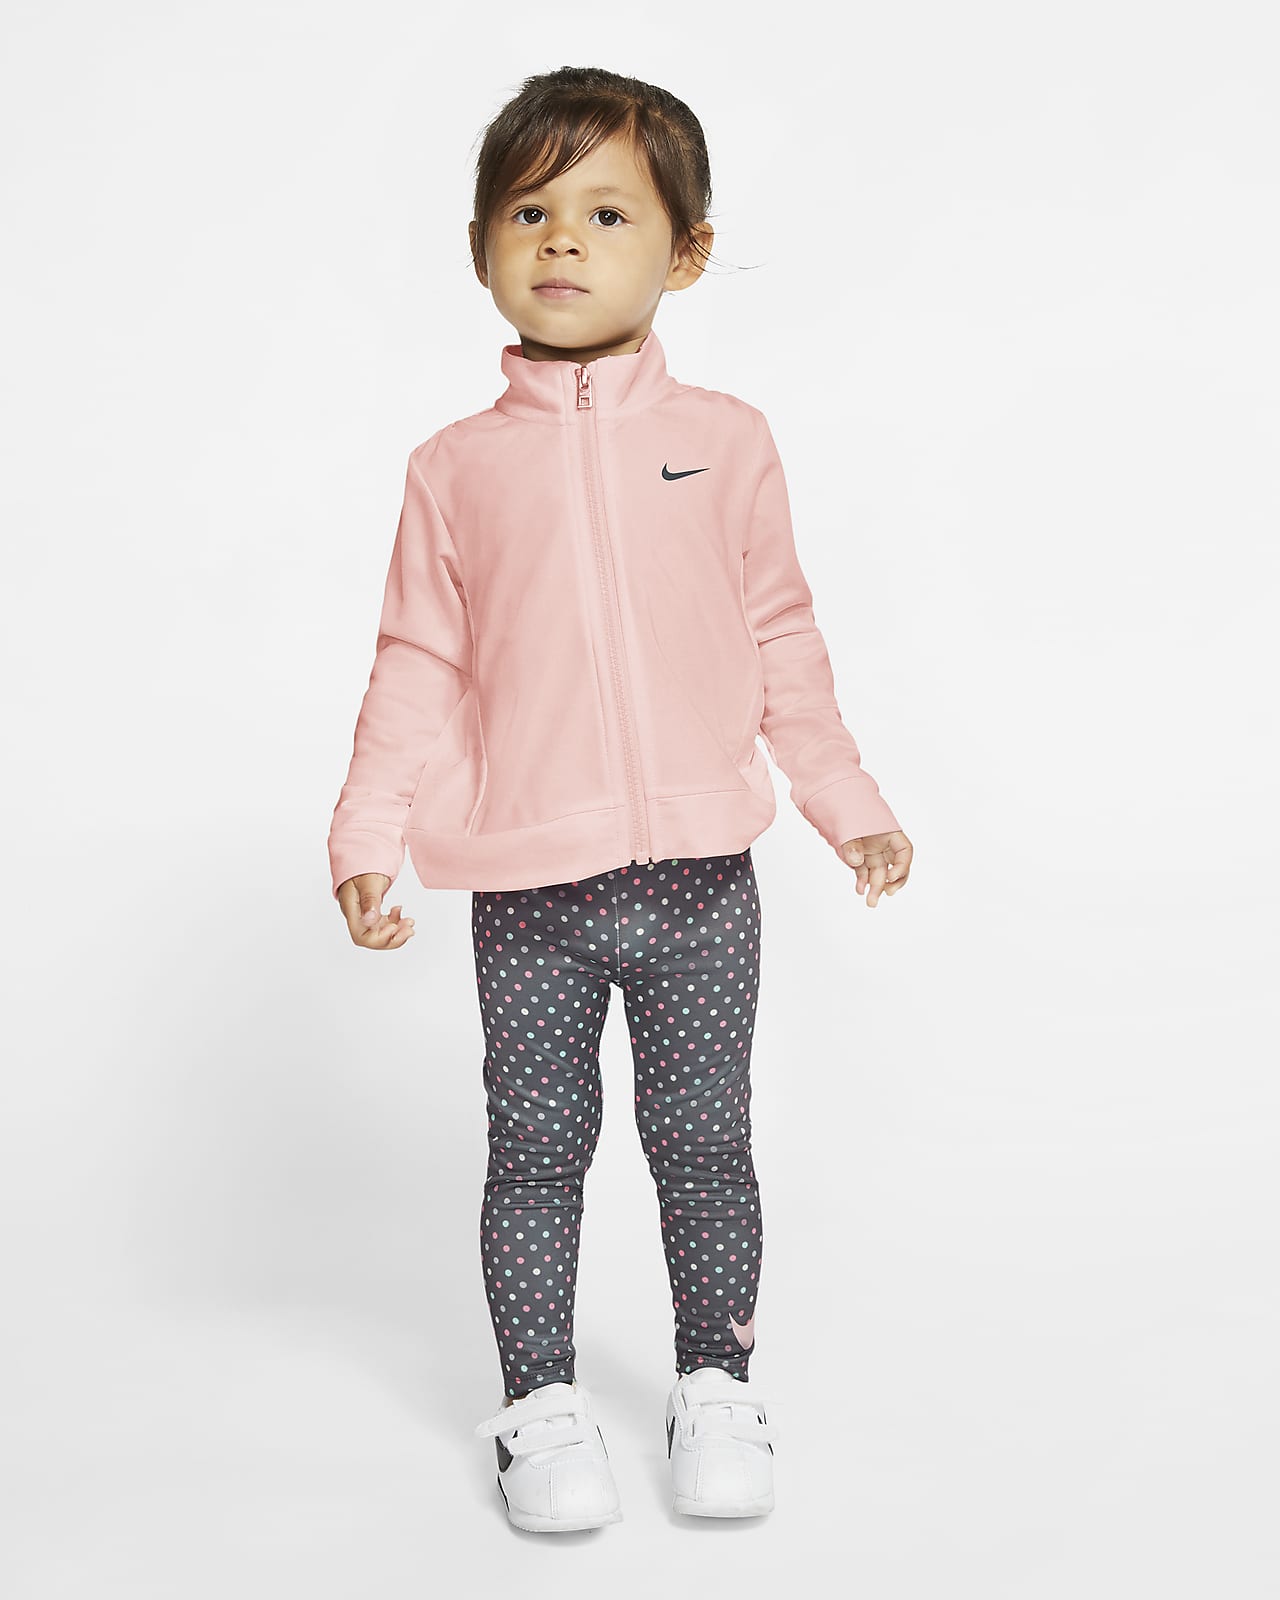 Babies In Nike Outfits | ubicaciondepersonas.cdmx.gob.mx